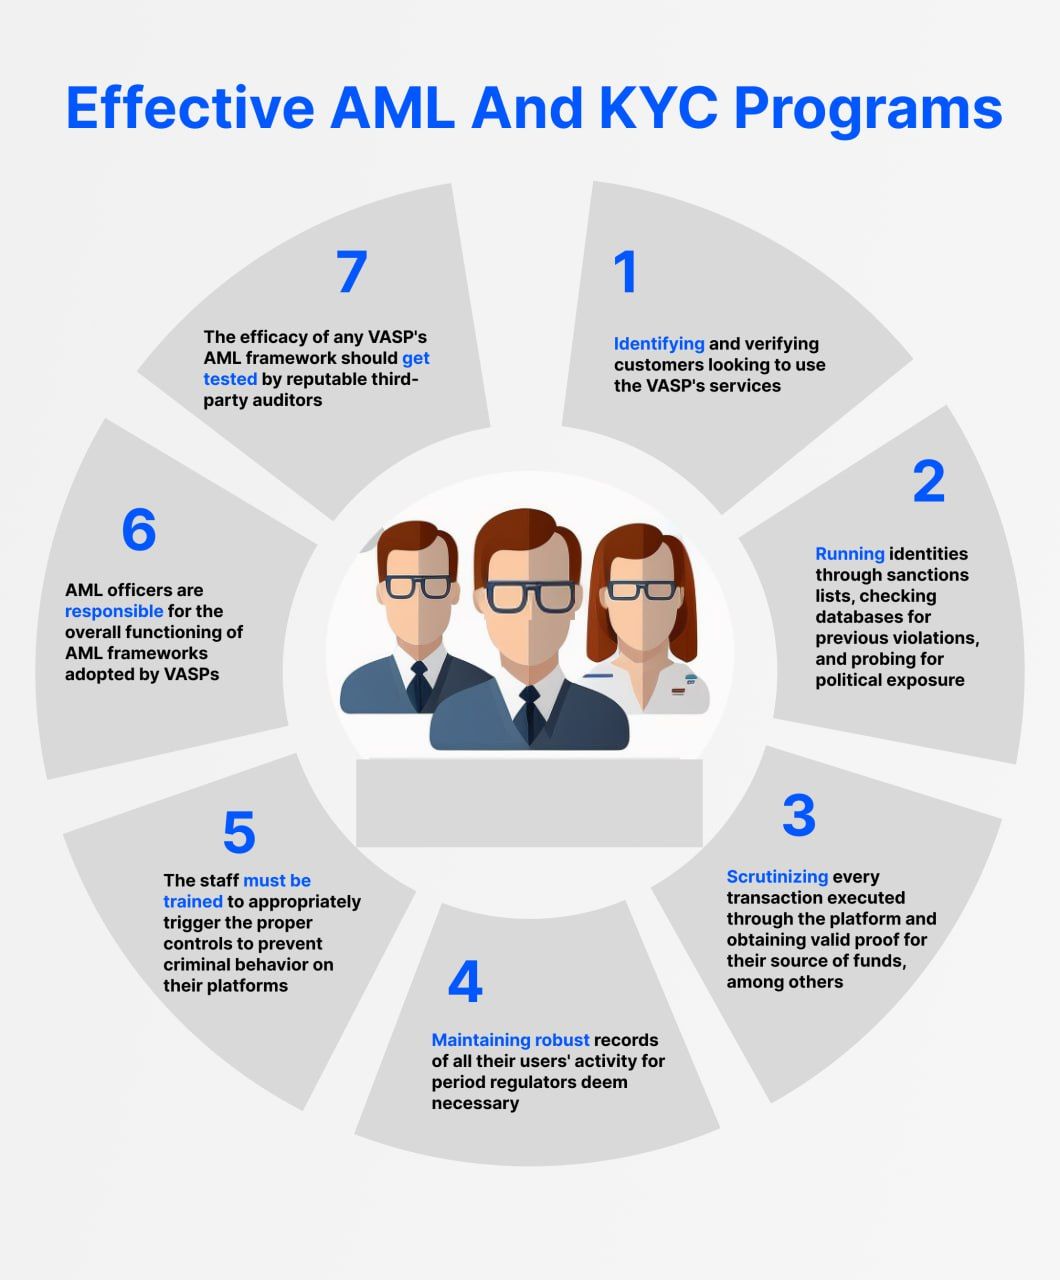 AML and KYC programs